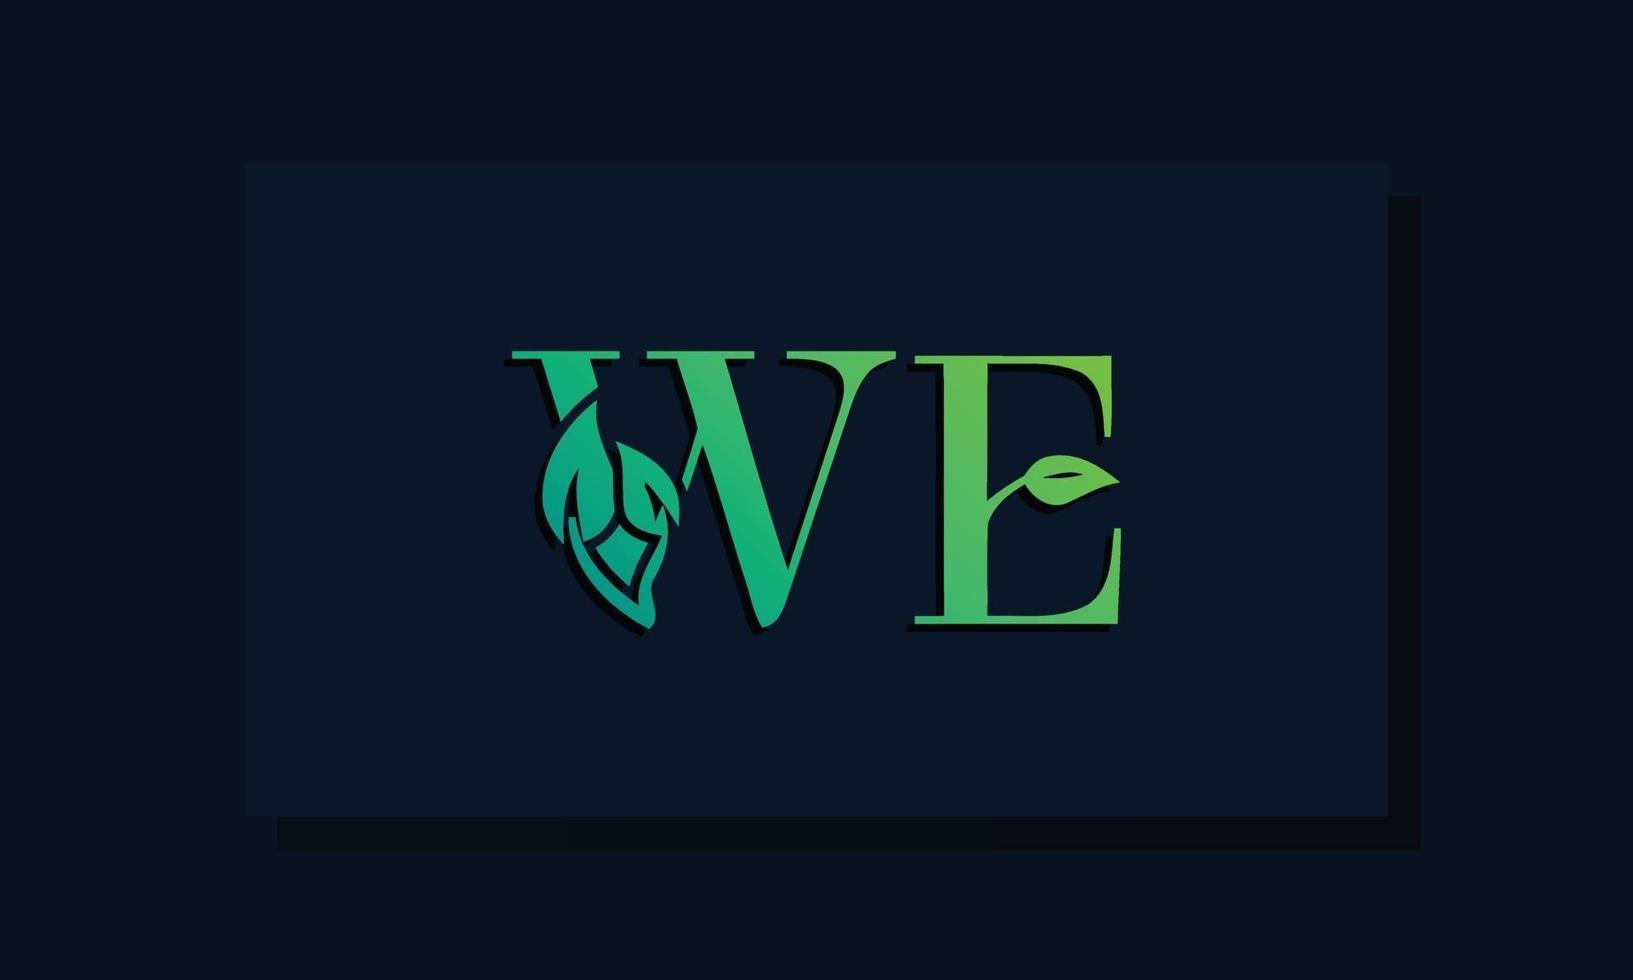 Minimal leaf style Initial WE logo vector